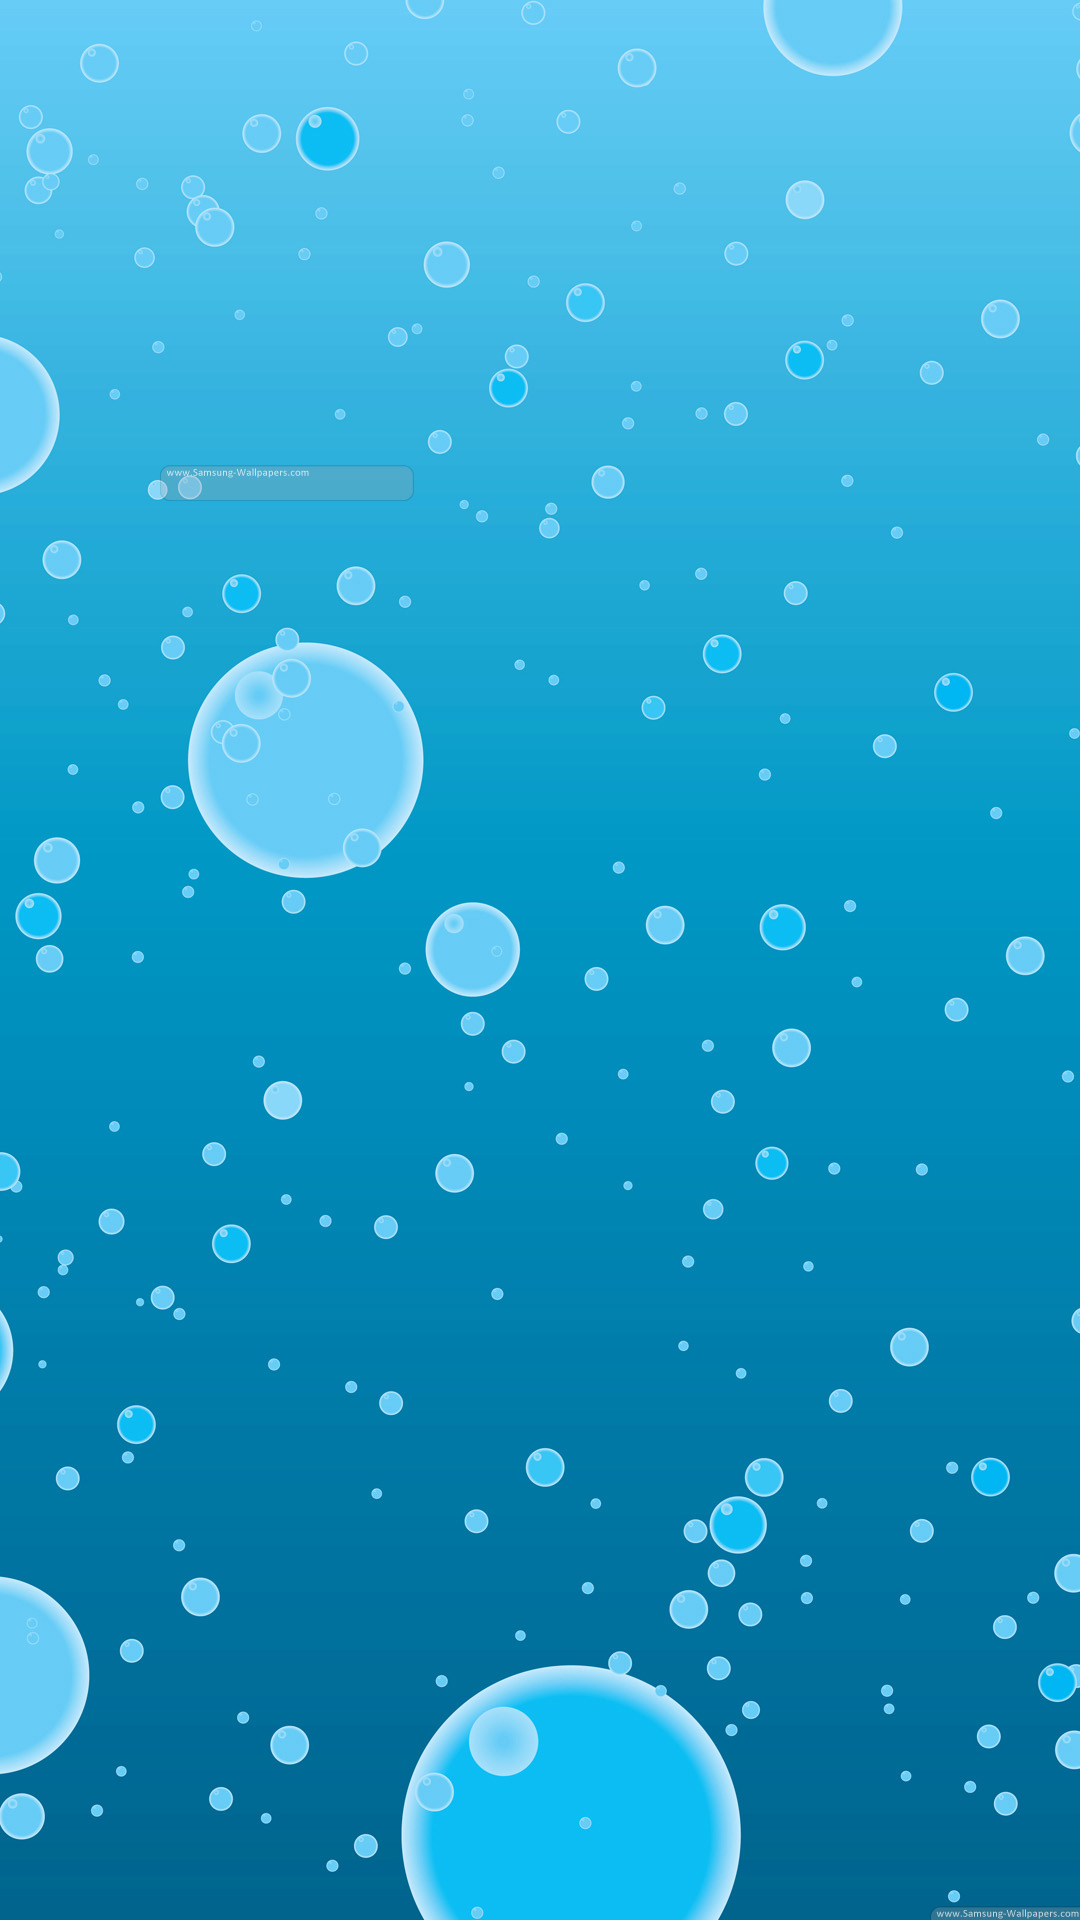 Water Bubbles Illustration iPhone 6 Plus HD Wallpaper HD - Free ...